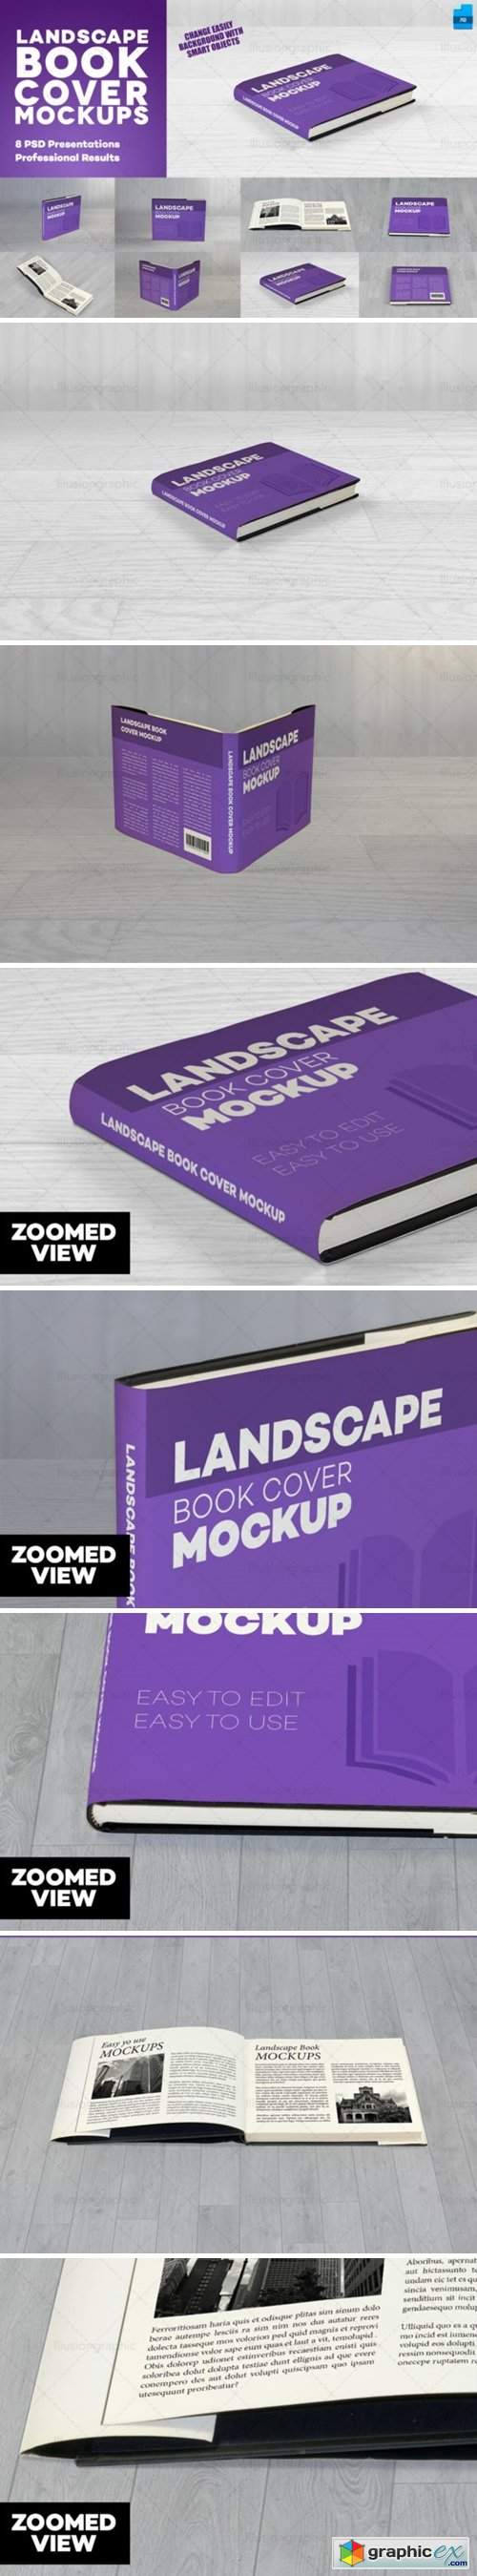  Realistic Landscape Book Cover Mockups 